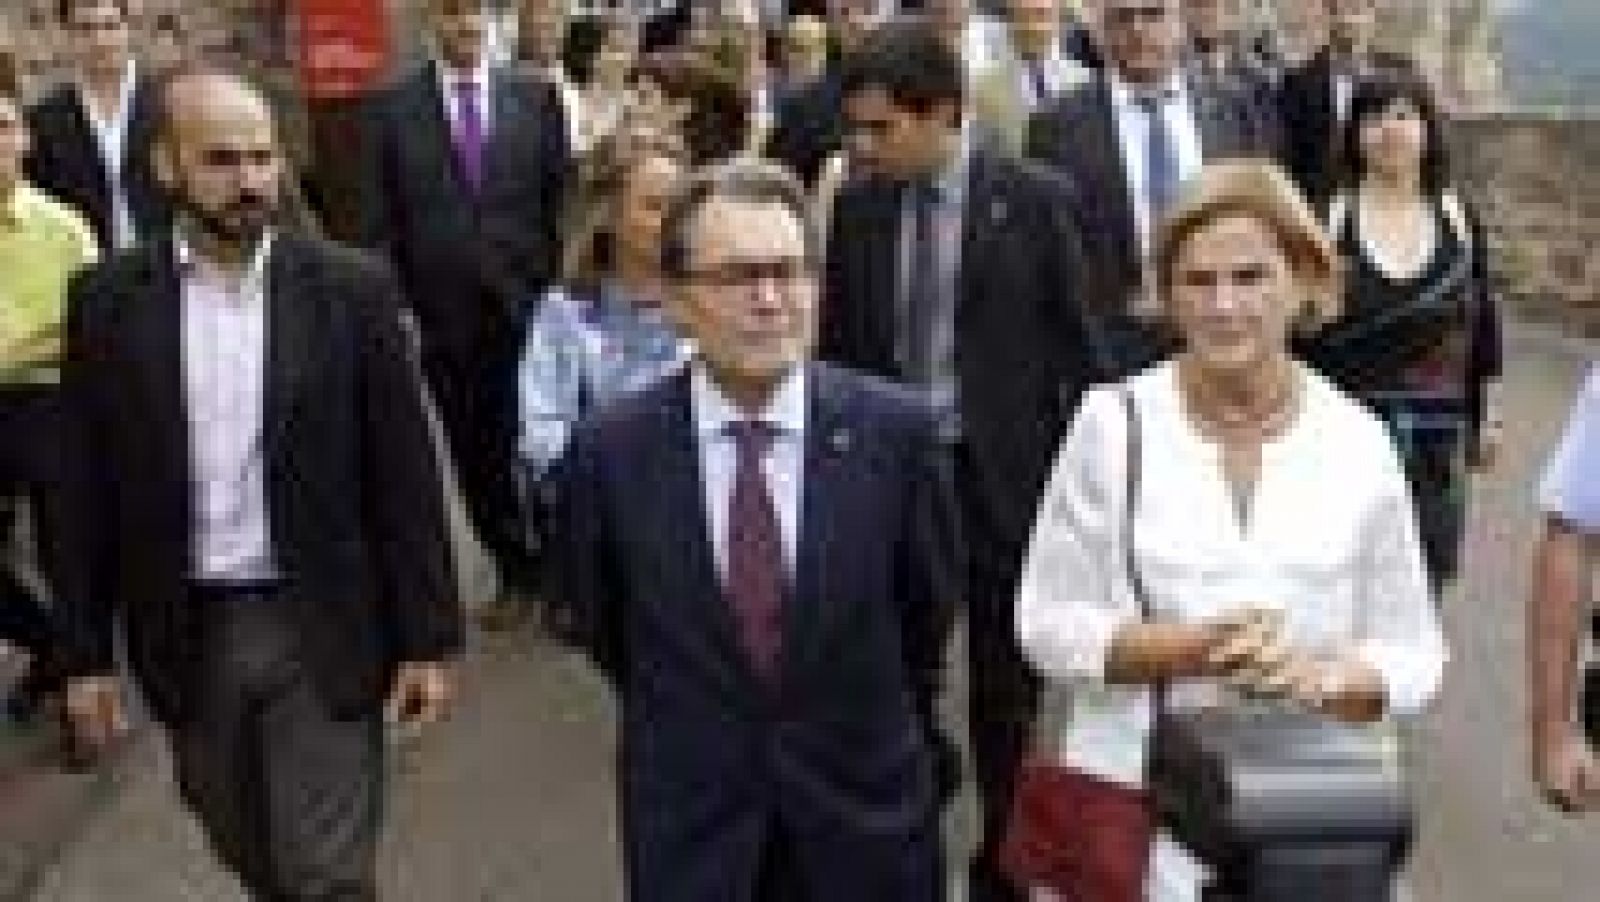 Artur Mas convocará la consulta soberanista la próxima semana